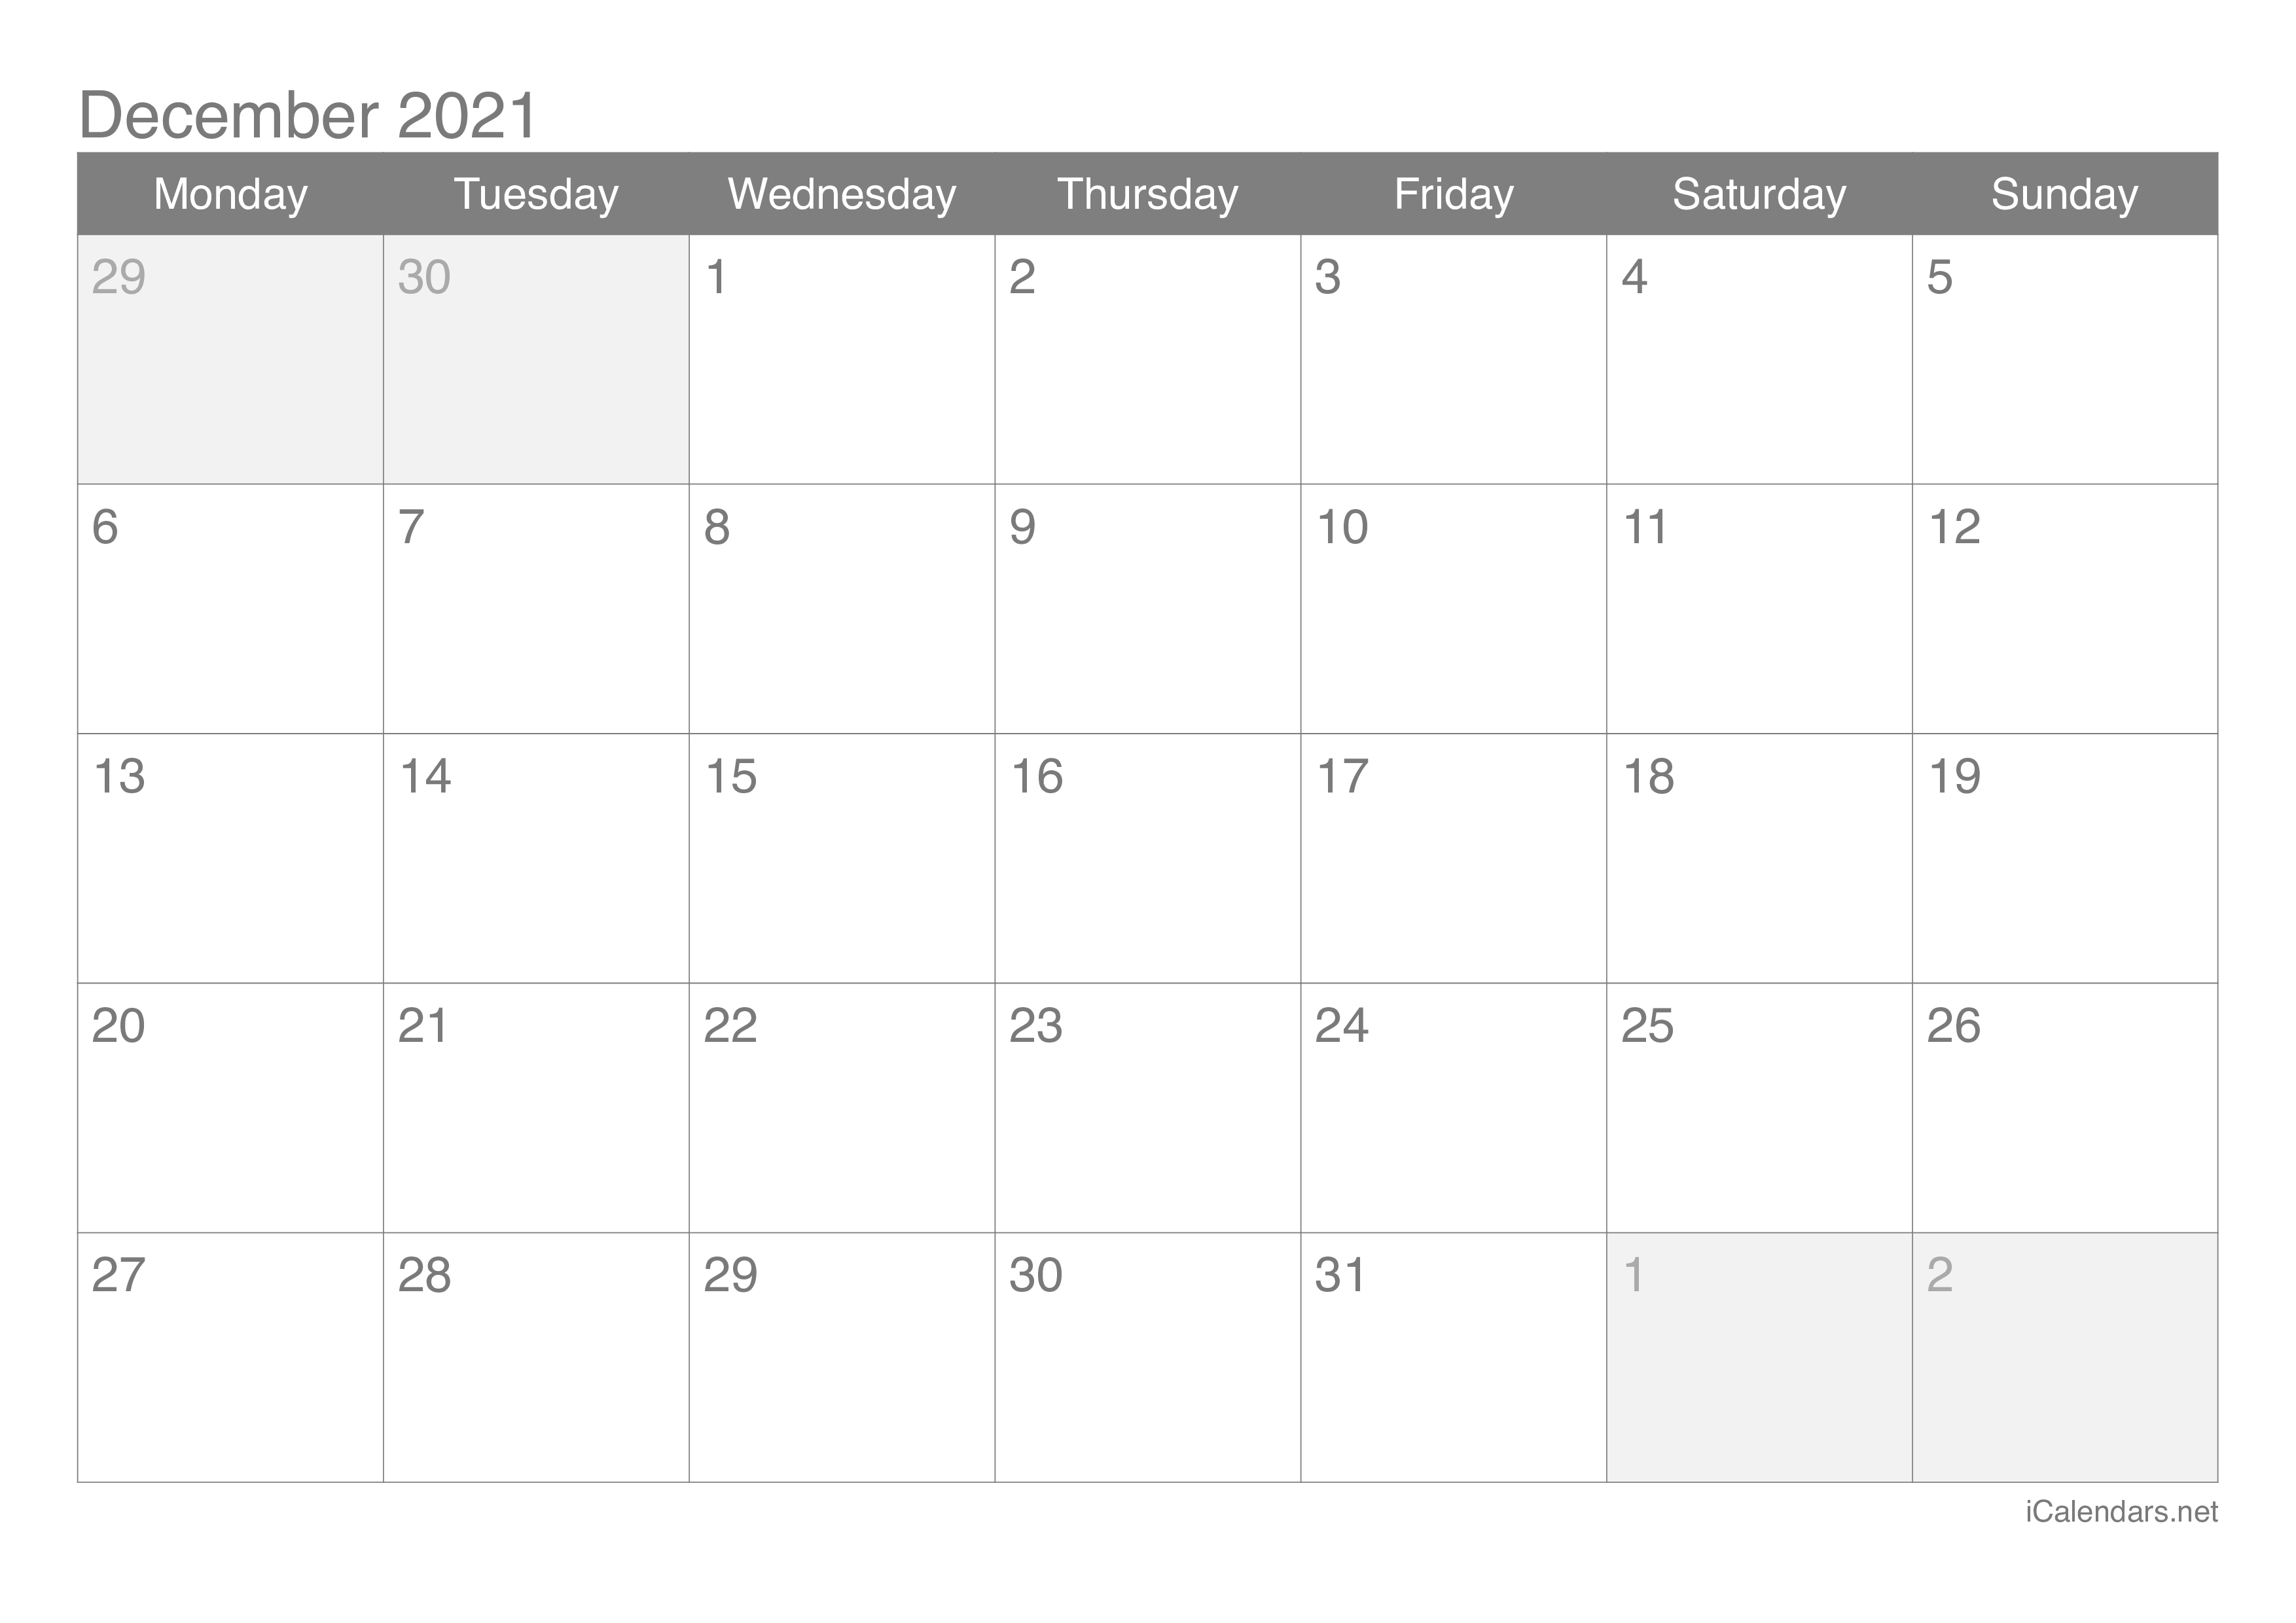 December 2021 Printable Calendar - Icalendars Calendar For November And December 2021